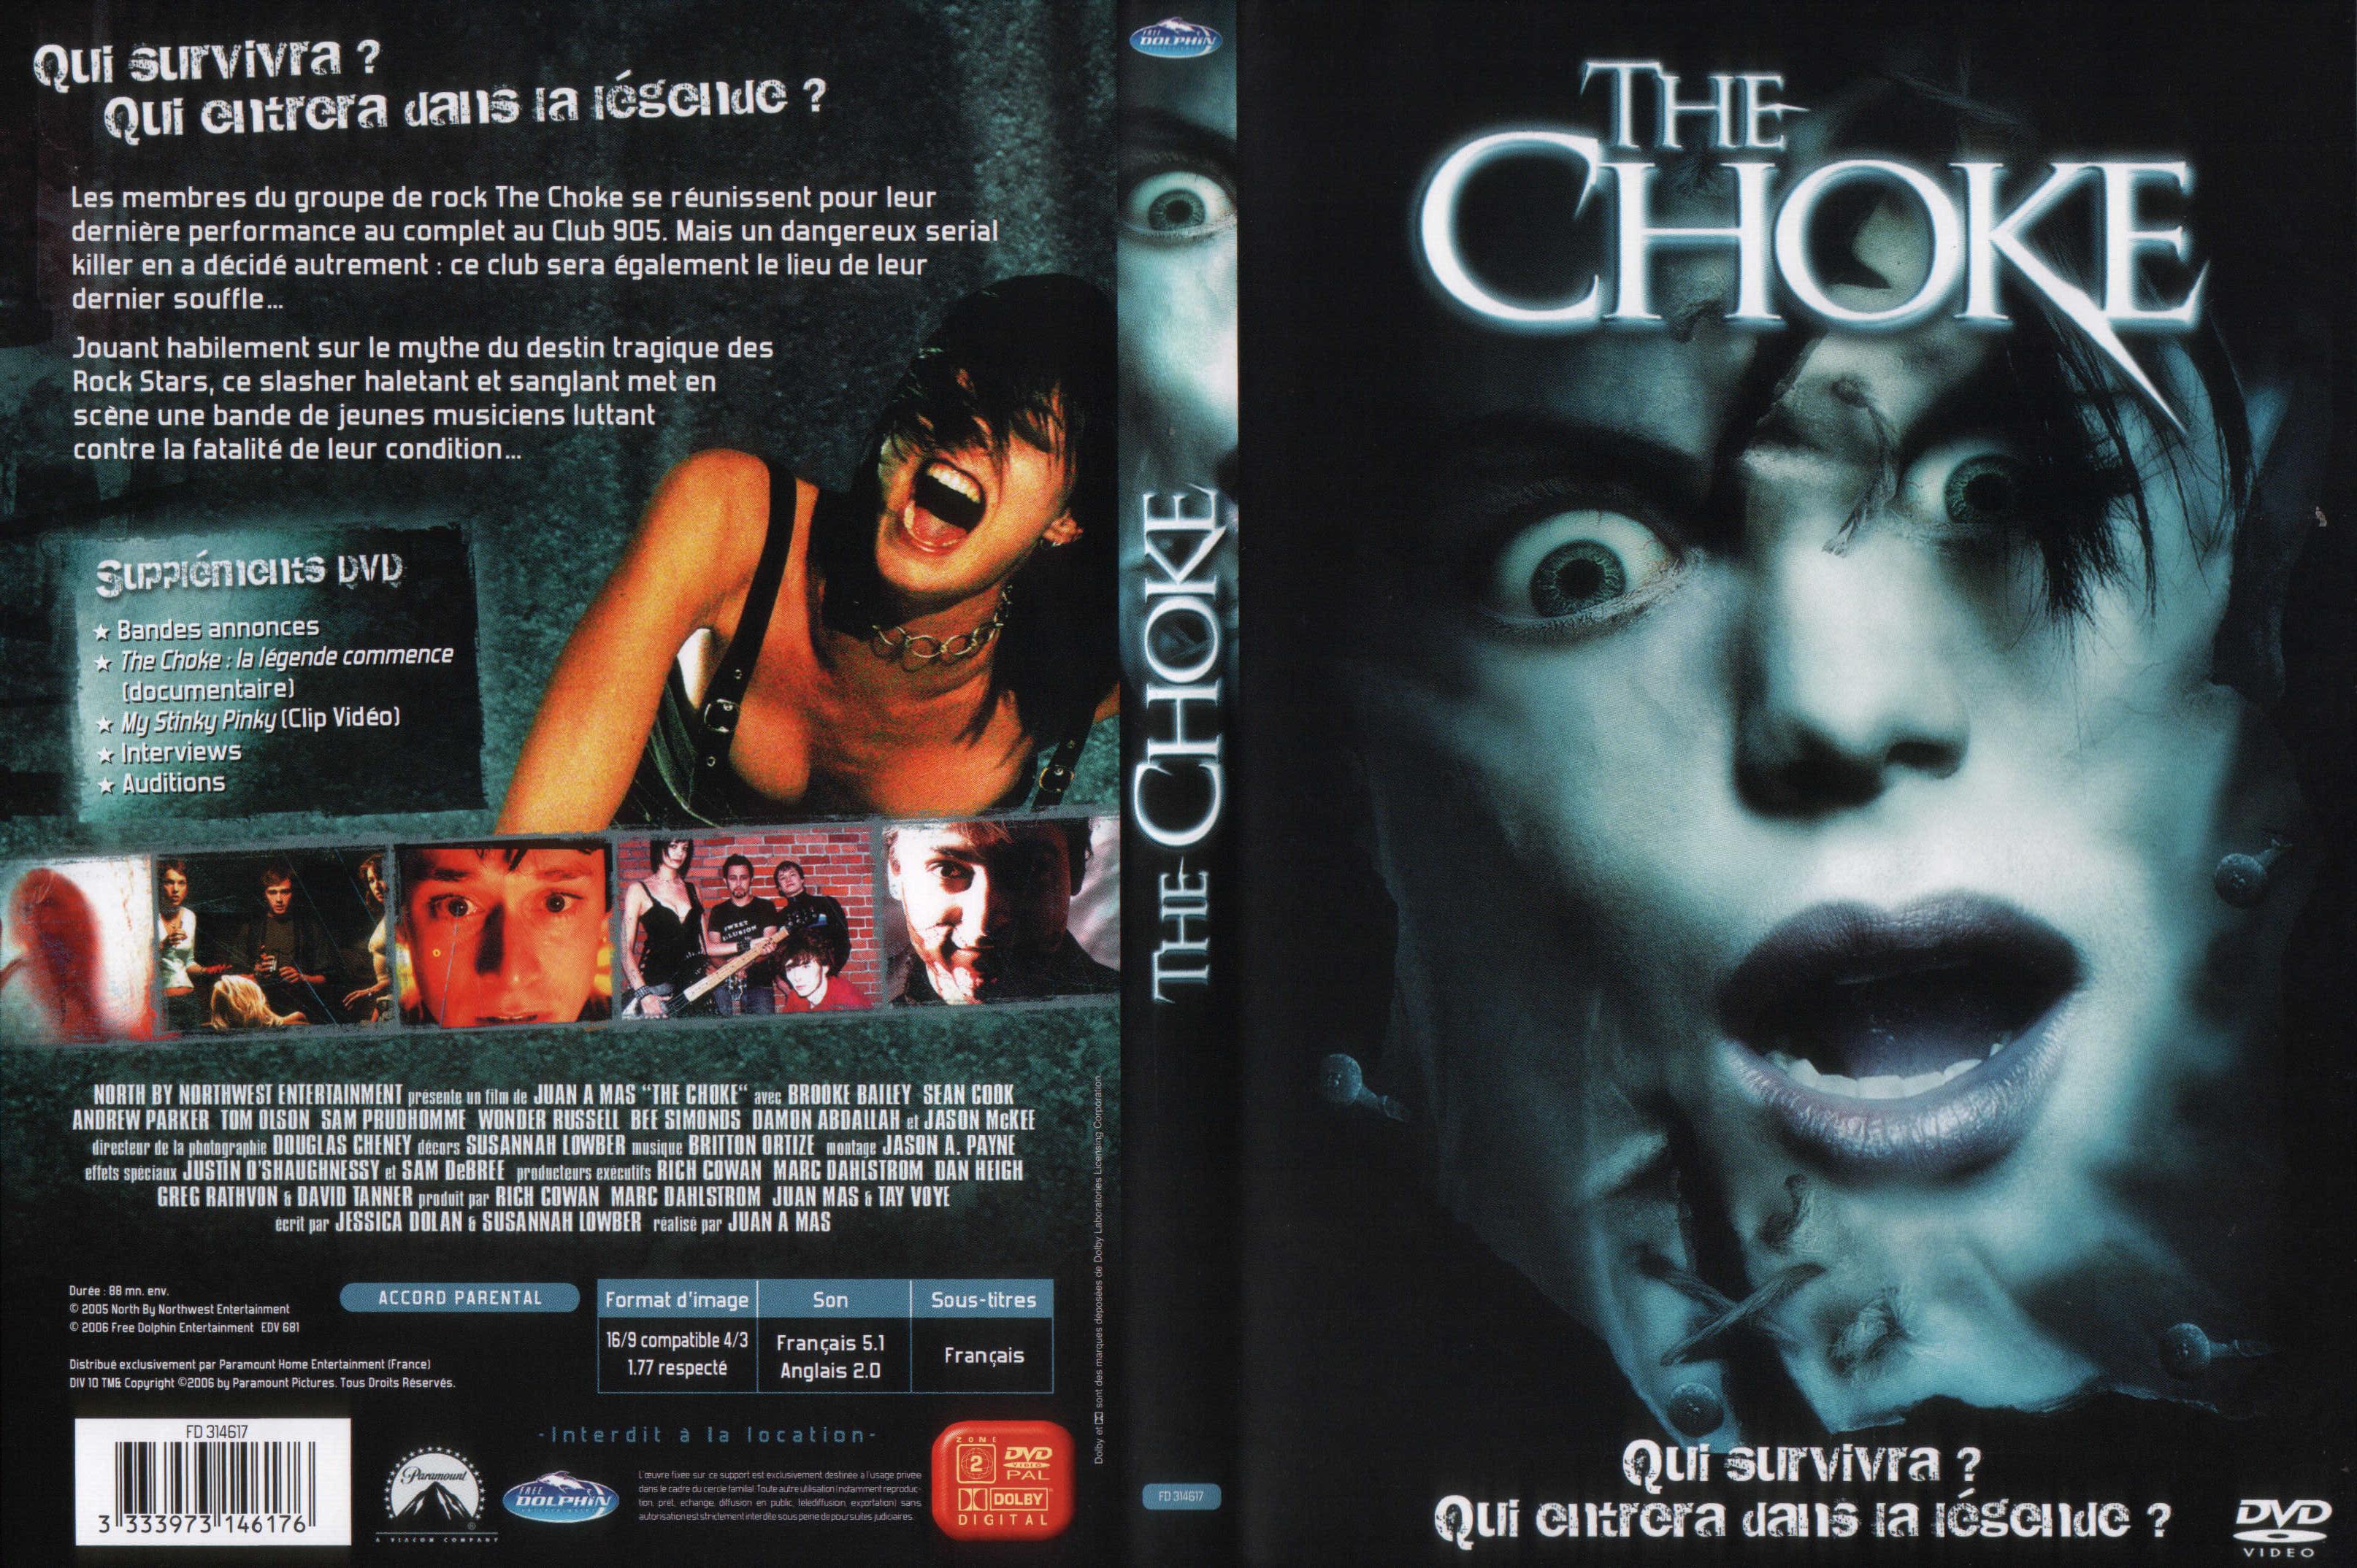 Jaquette DVD The choke